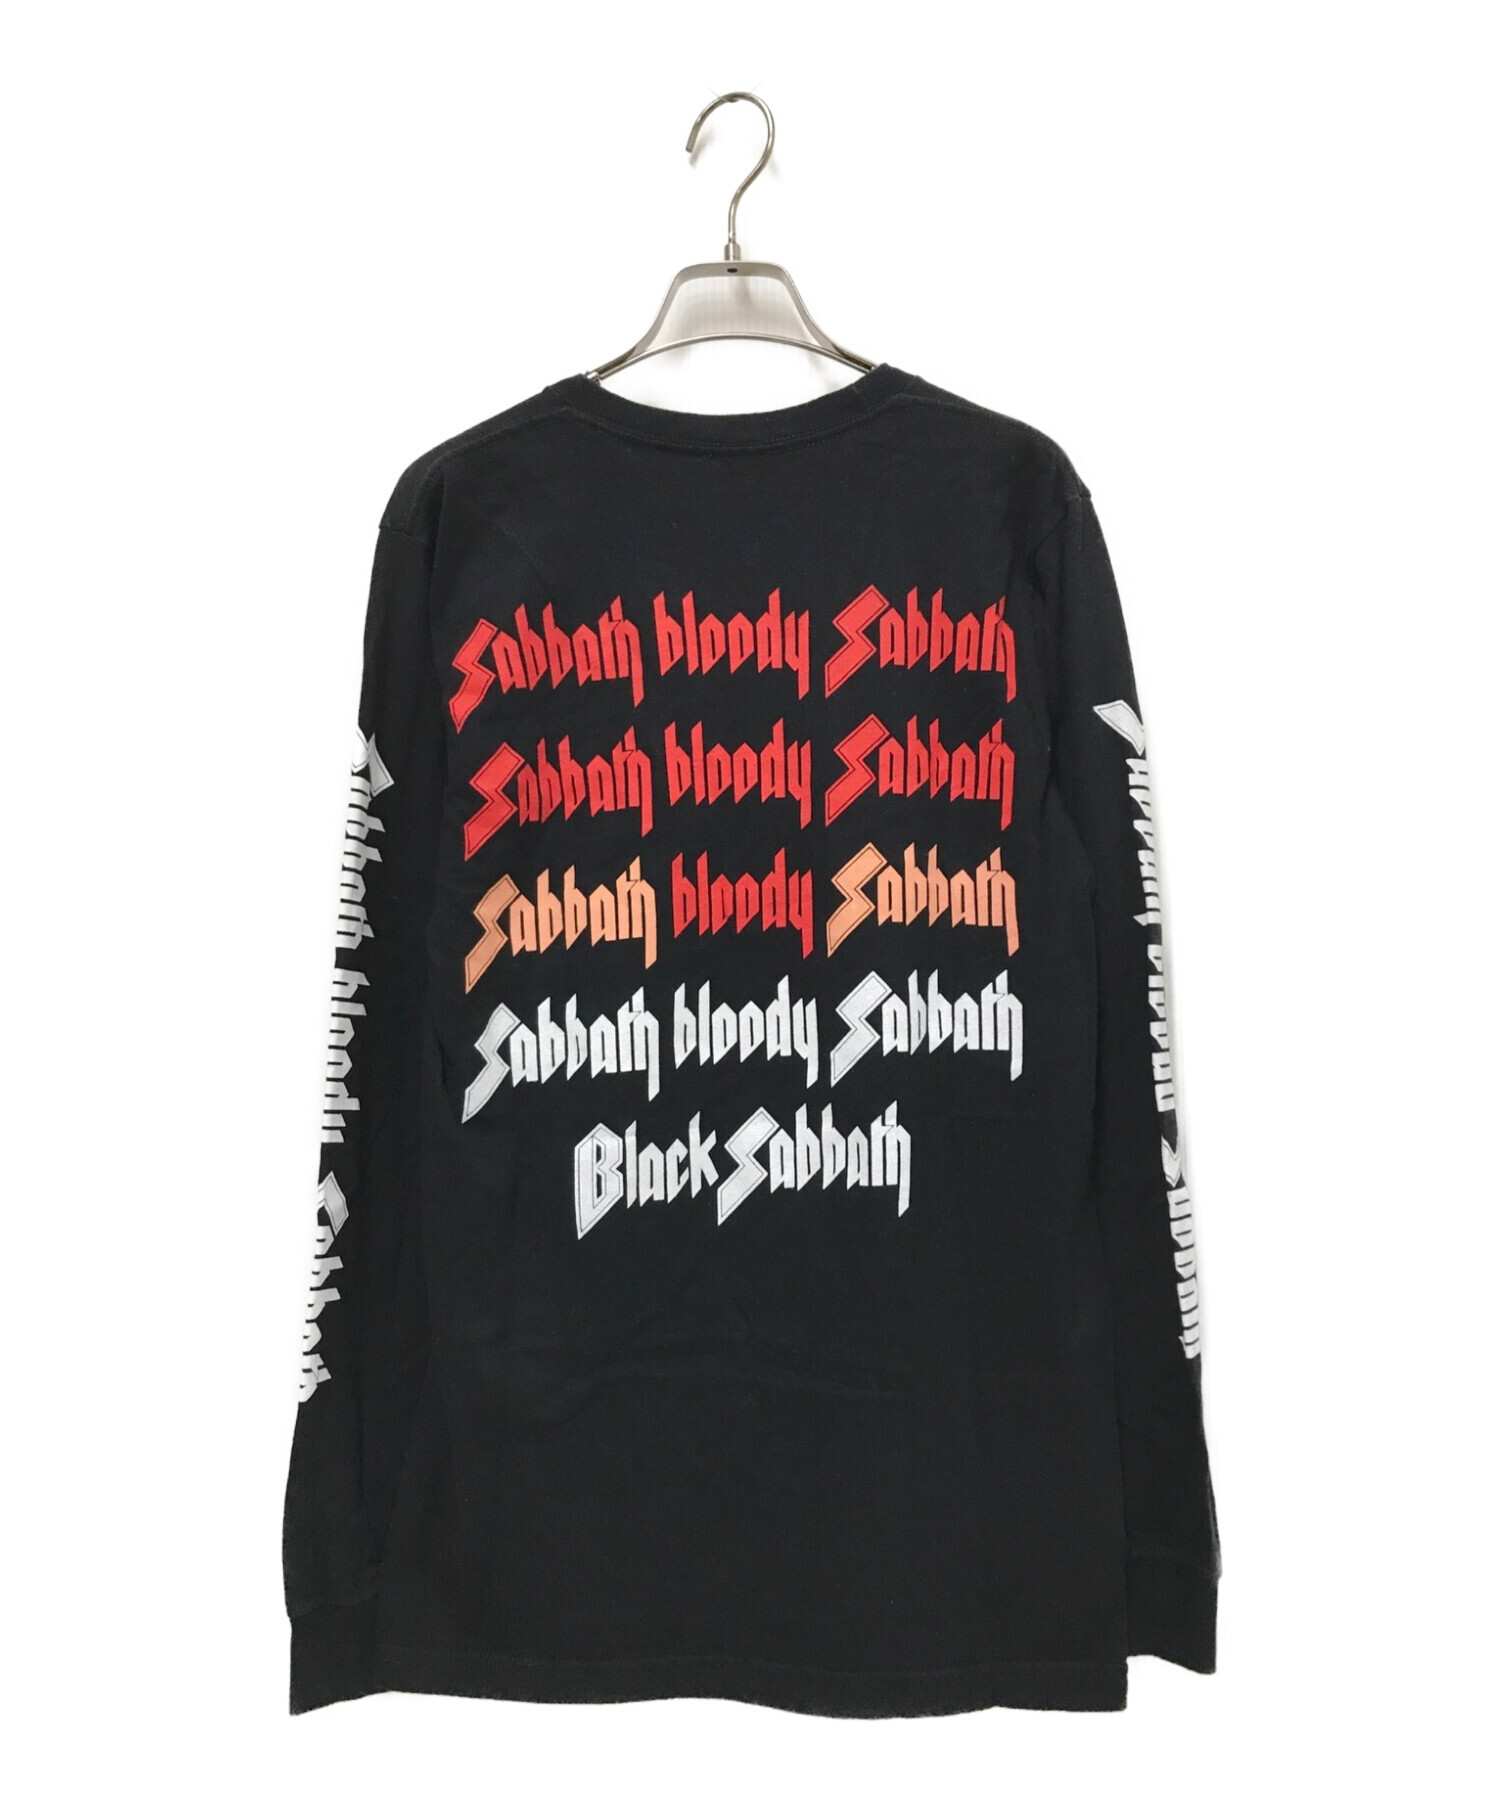 supreme black sabbath シュプリーム ブラックサバスロンTTシャツ/カットソー(七分/長袖)